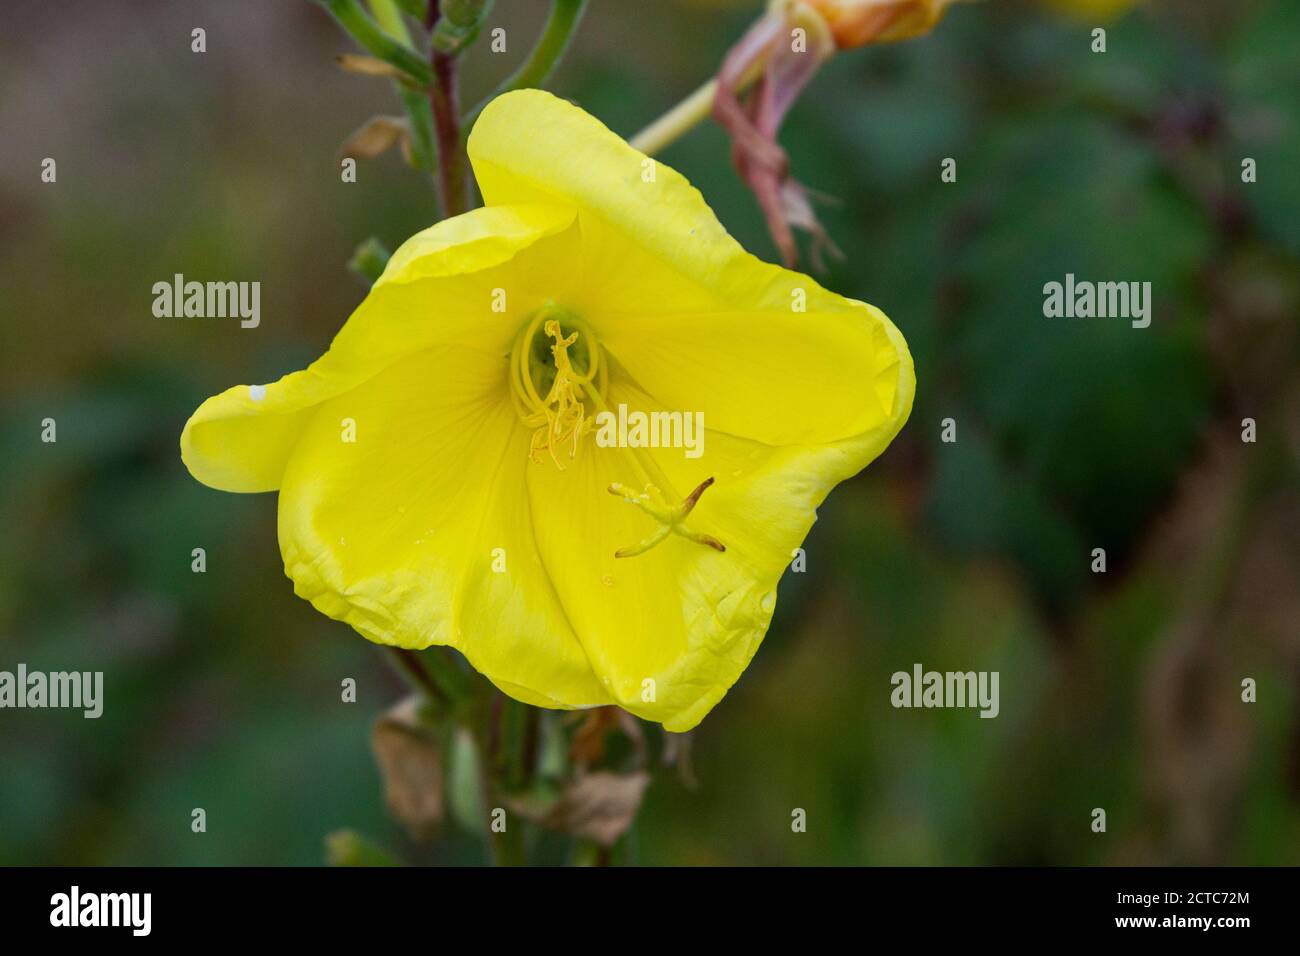 The flower of a common evening-primrose (Oenothera biennis) Stock Photo